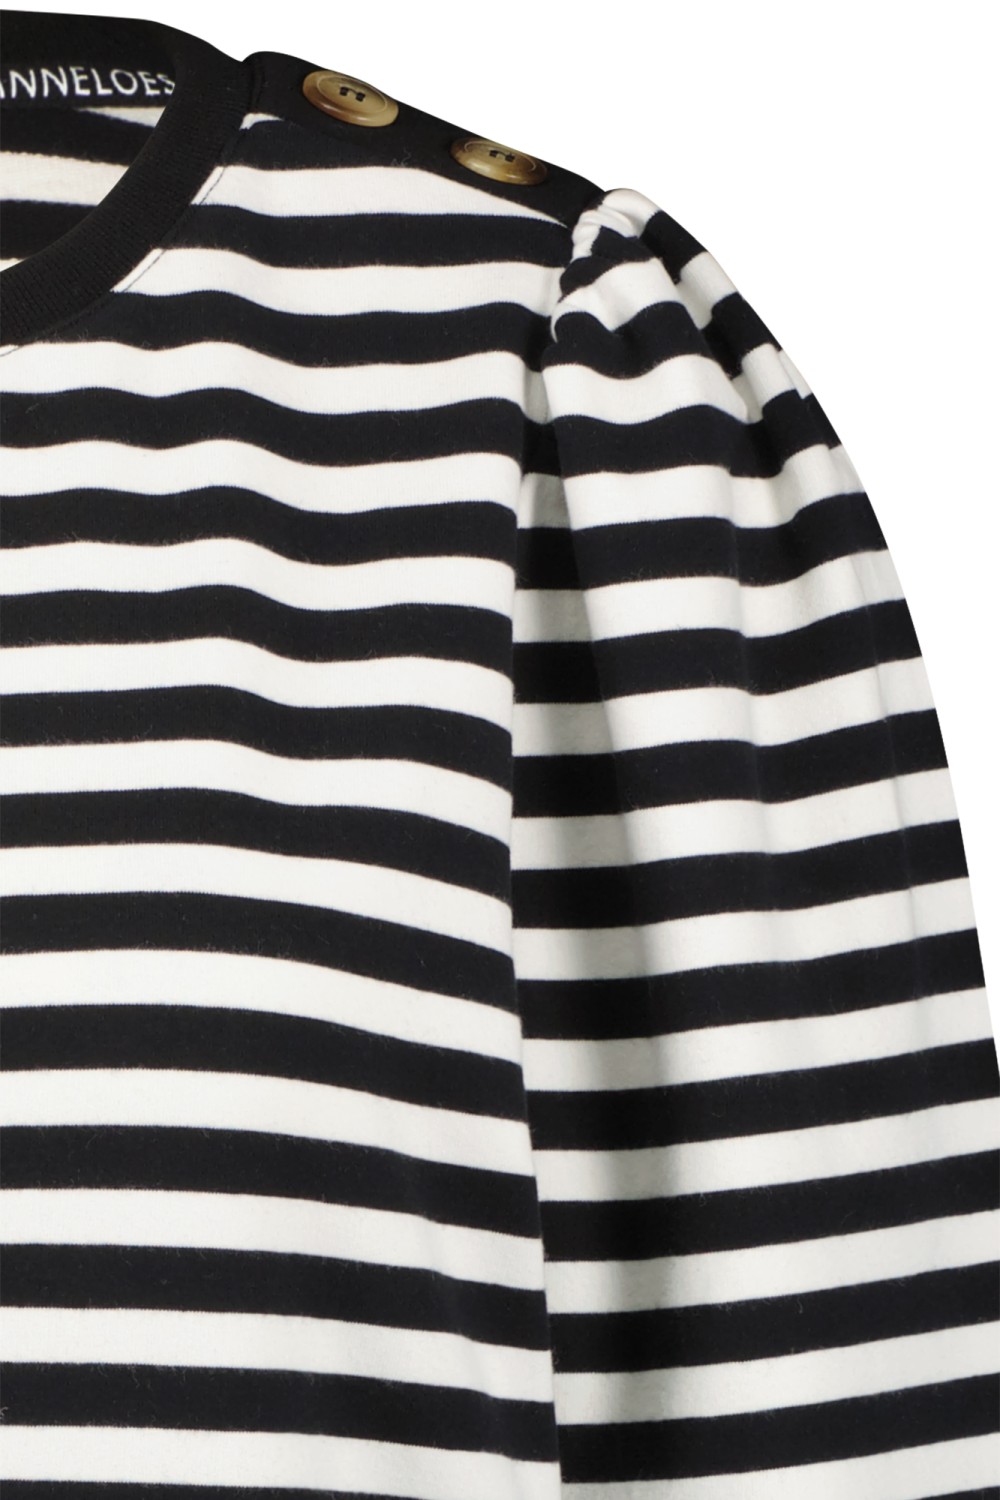 gaan beslissen Kritisch Wetenschap Studio Anneloes 06881 Maura stripe sweater Black/off white - Siezz